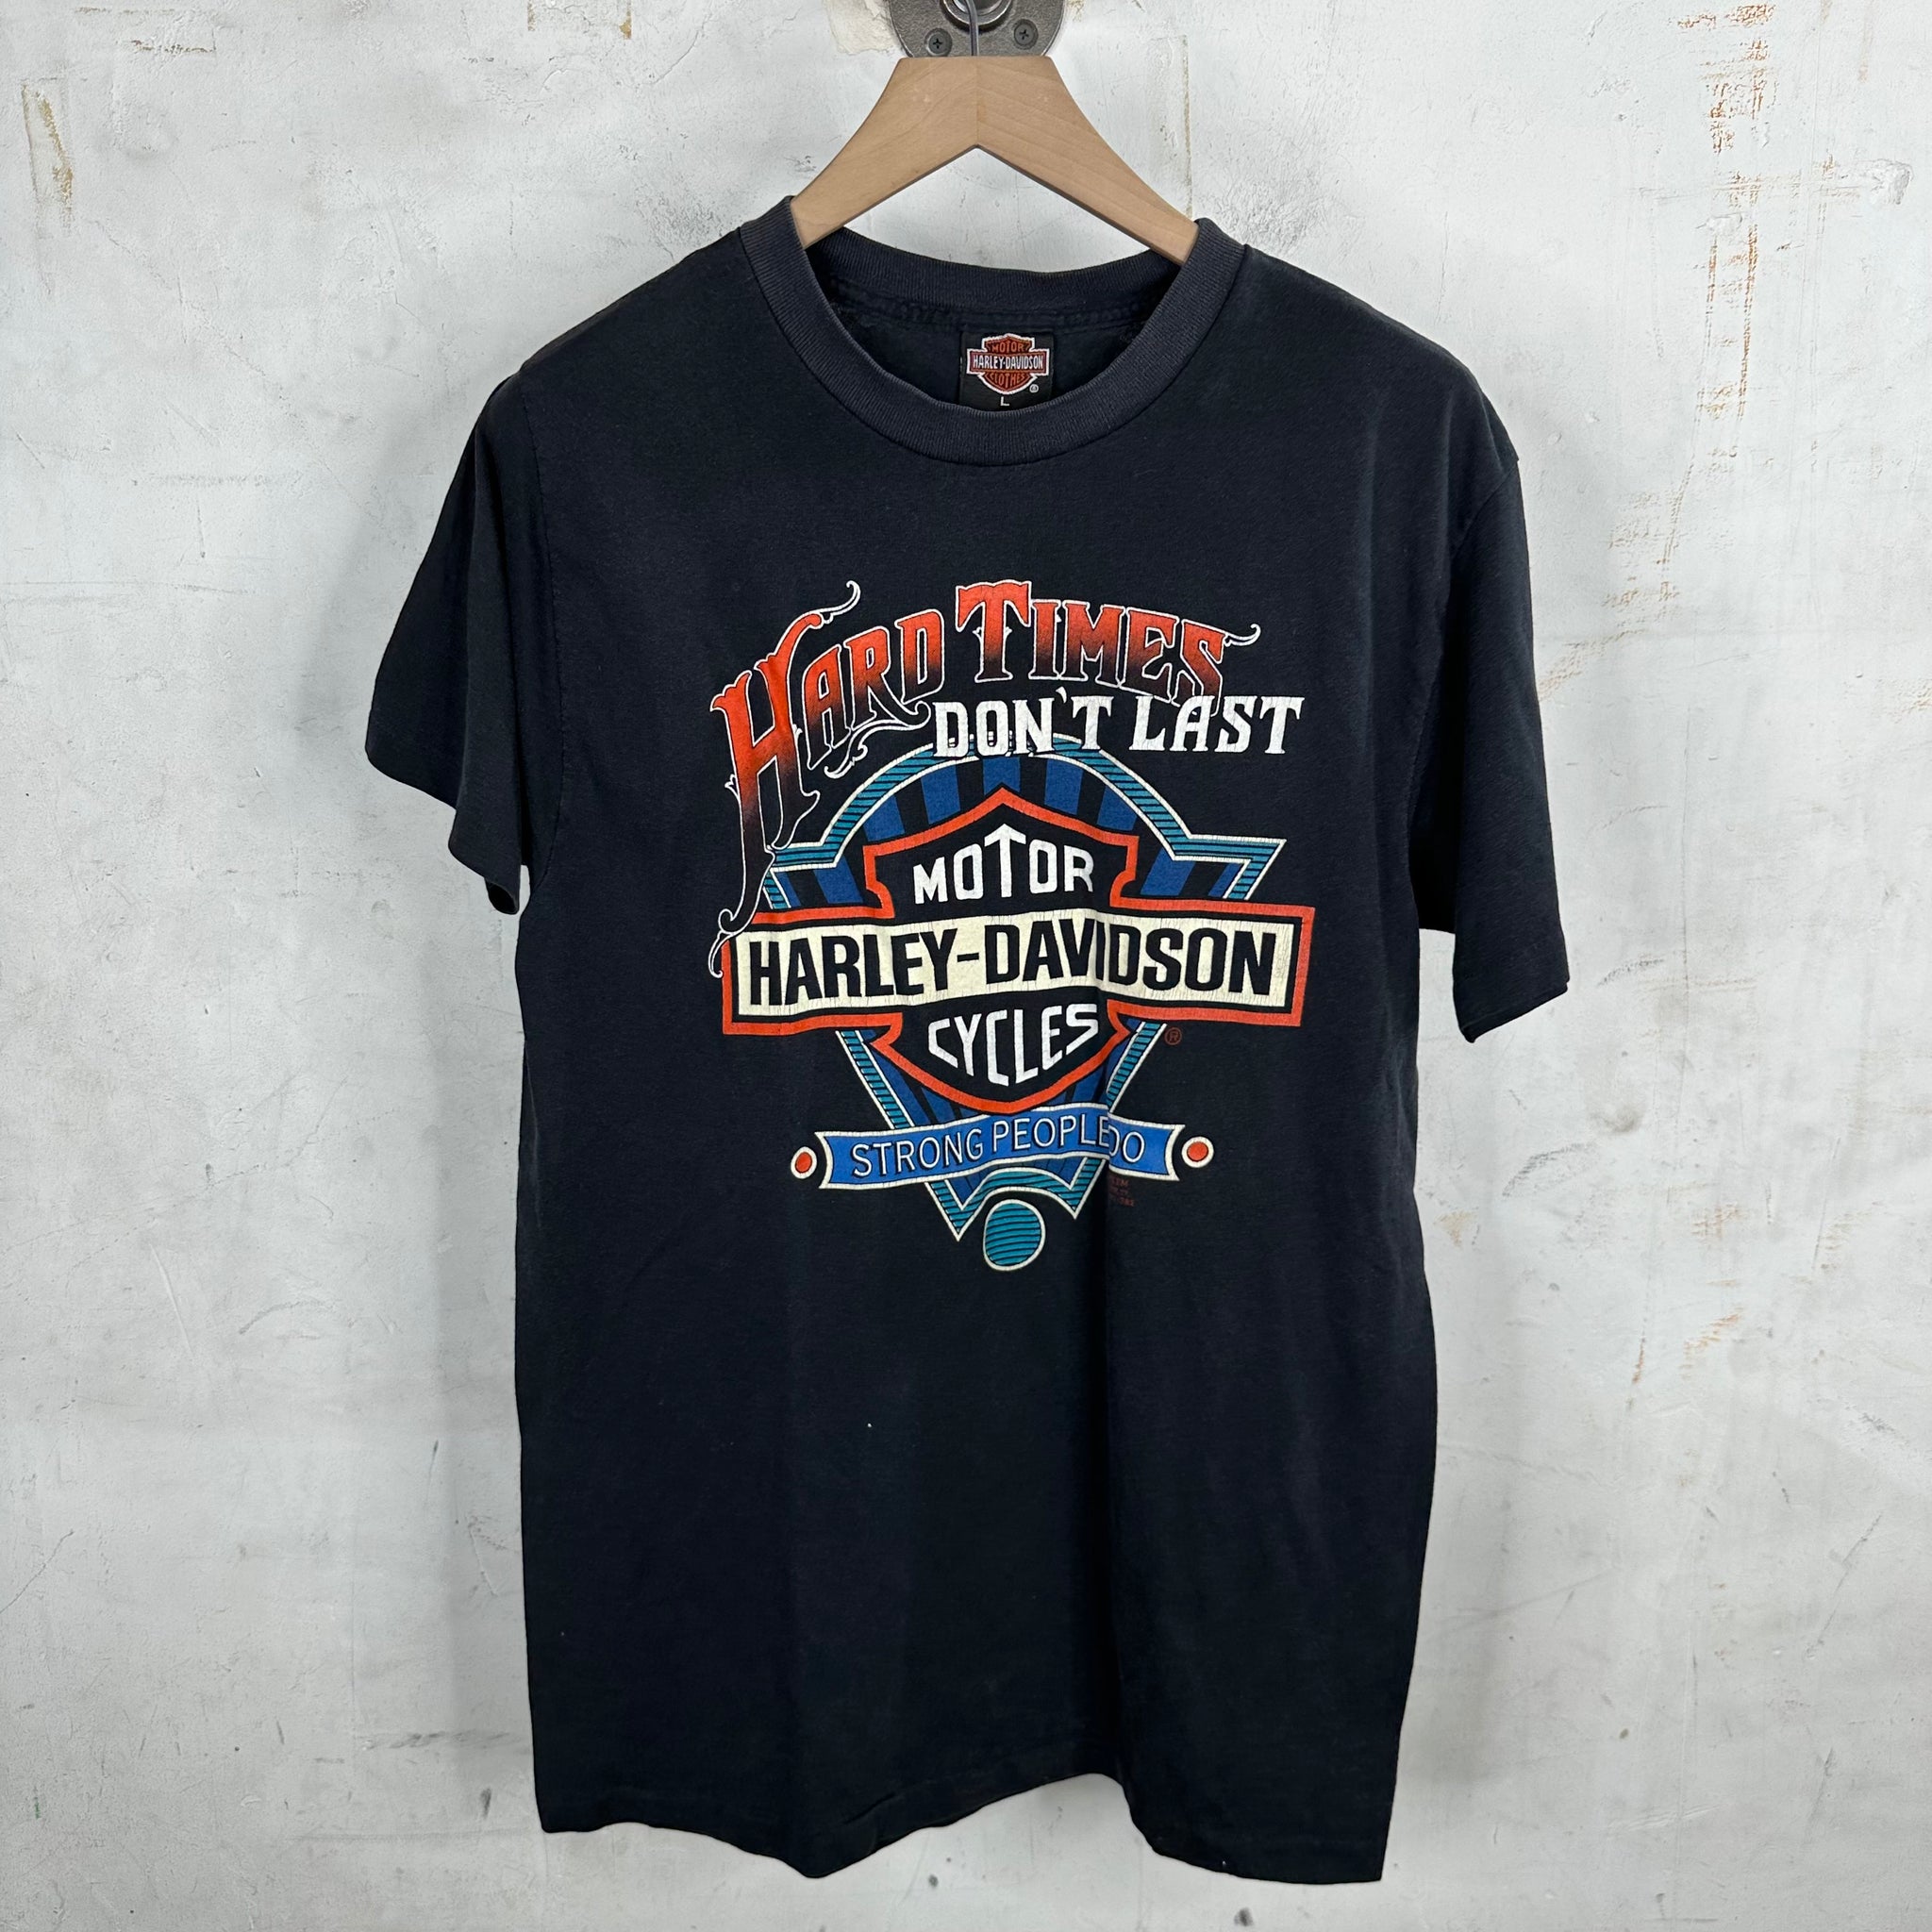 Vintage Harley Davidson Hard Times T-Shirt